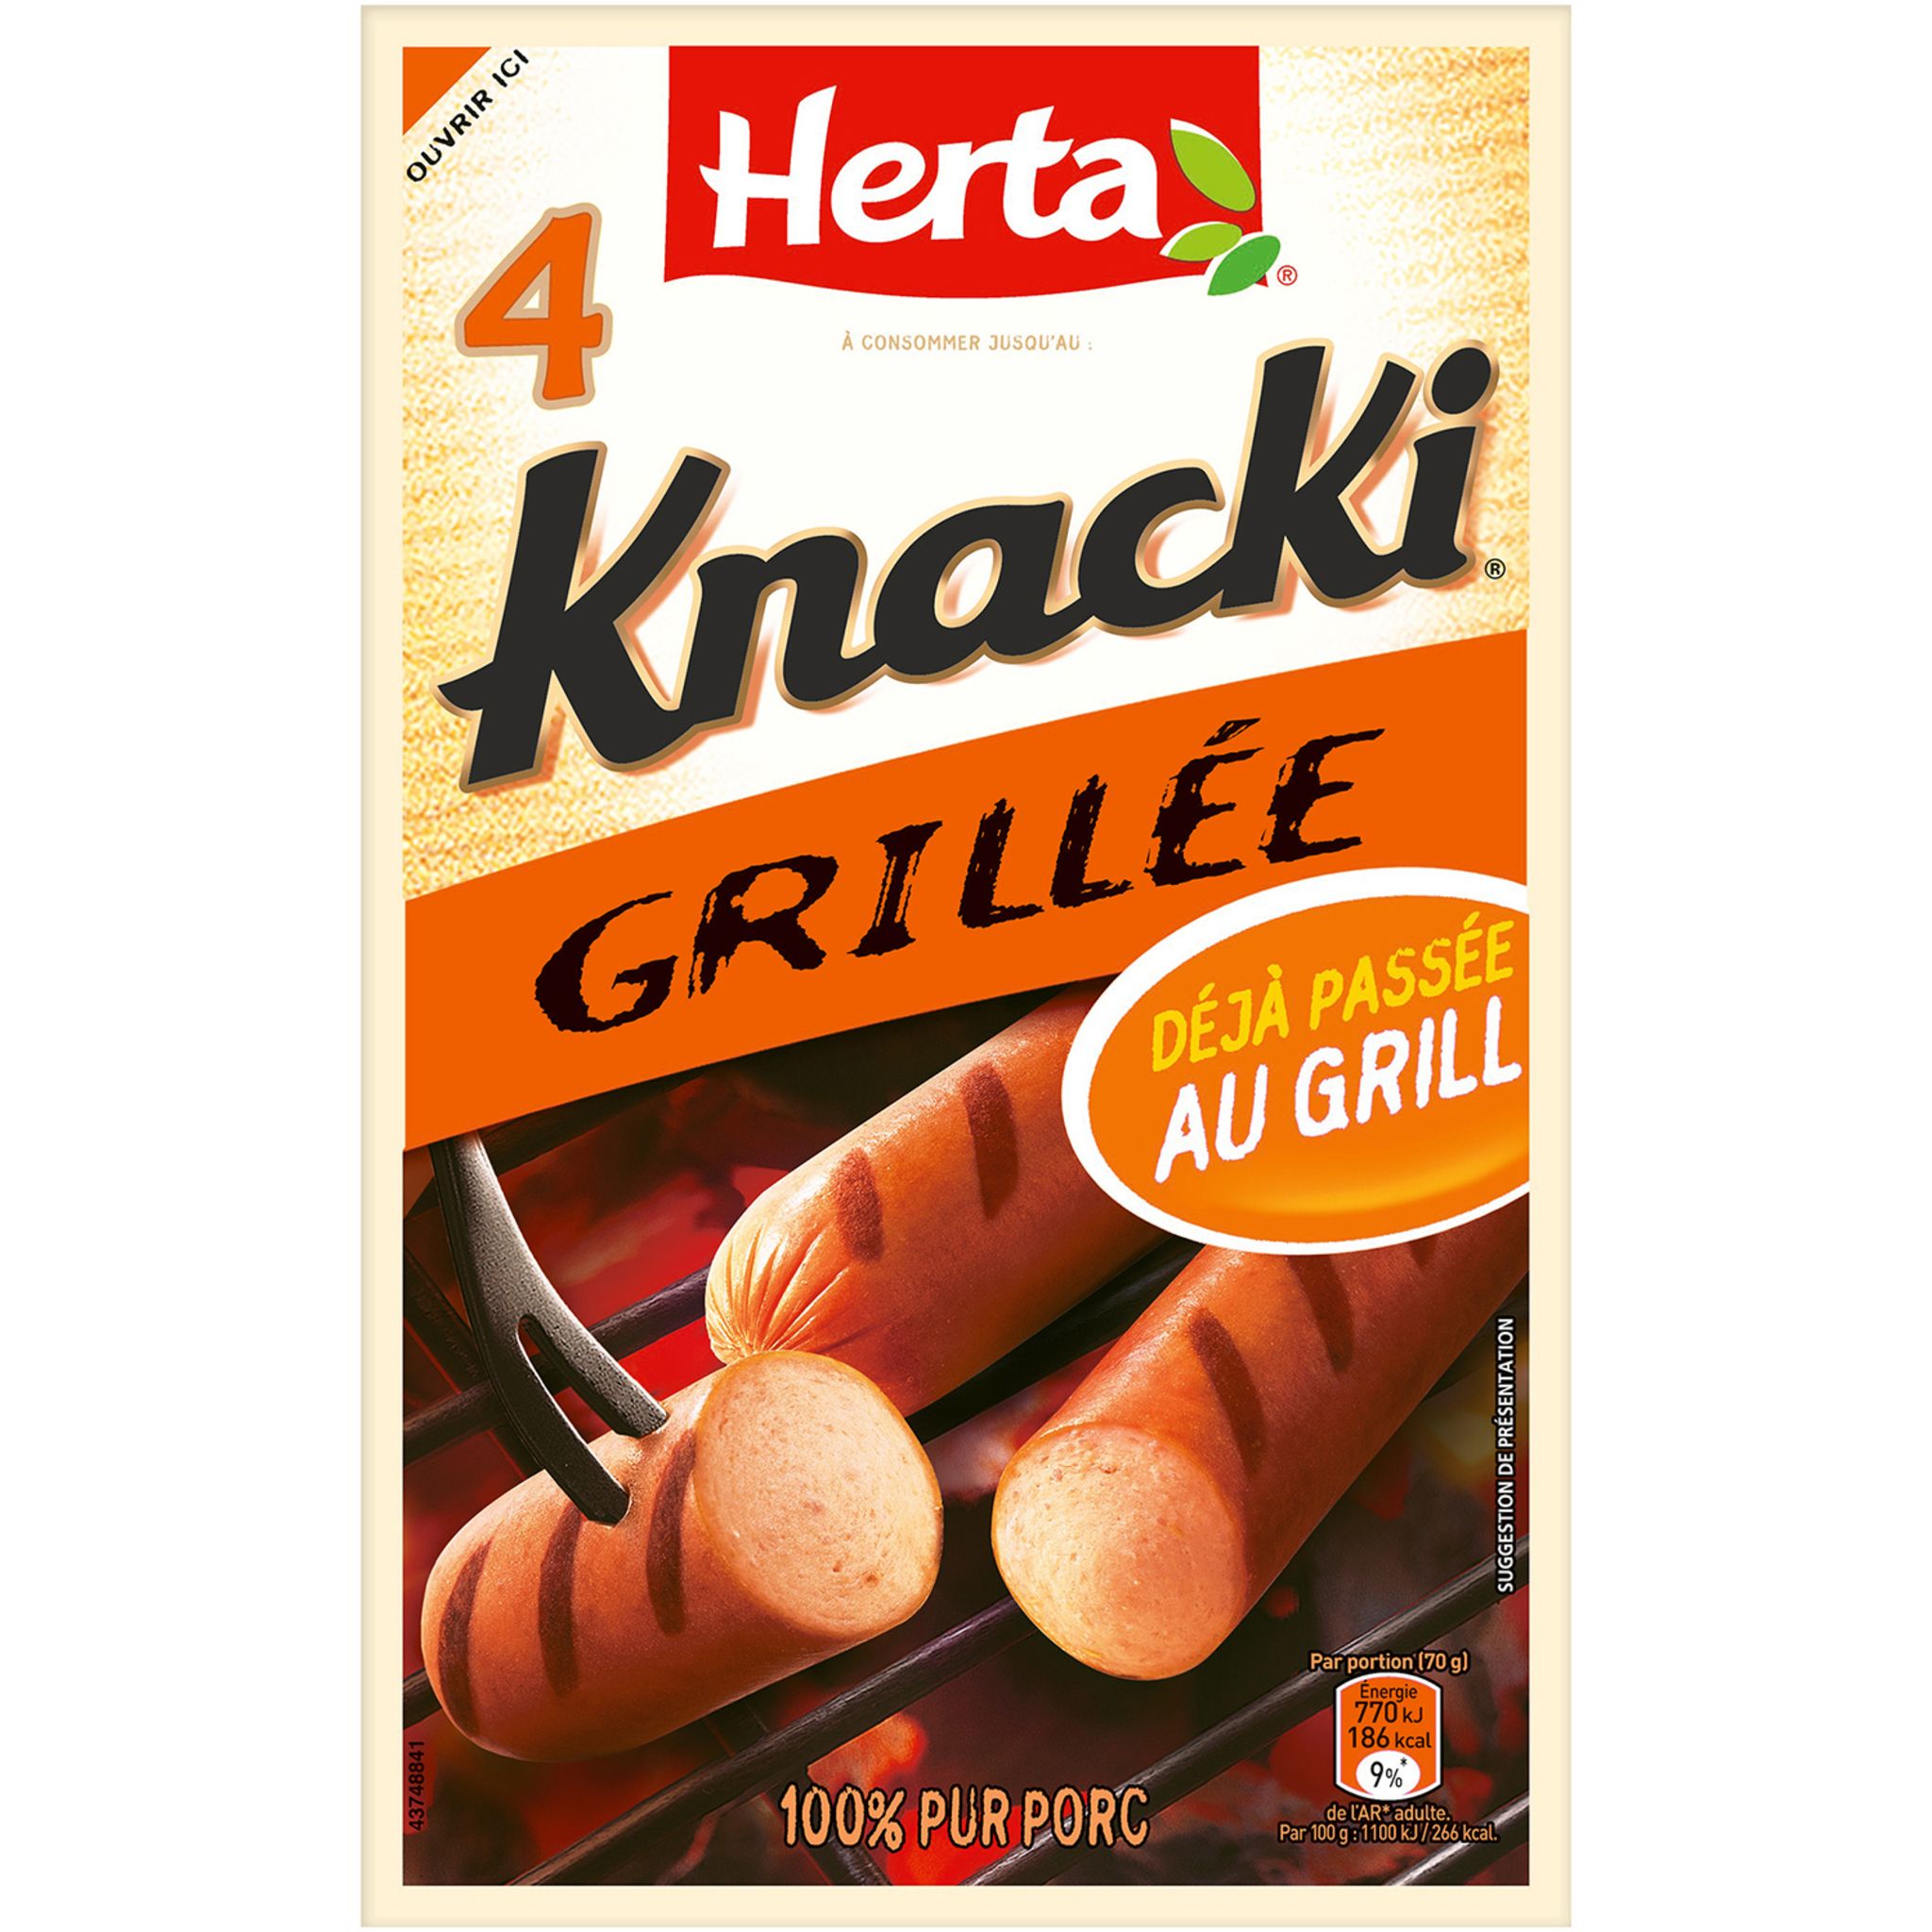 HERTA Herta knacki grillée x4 -280g pas cher 